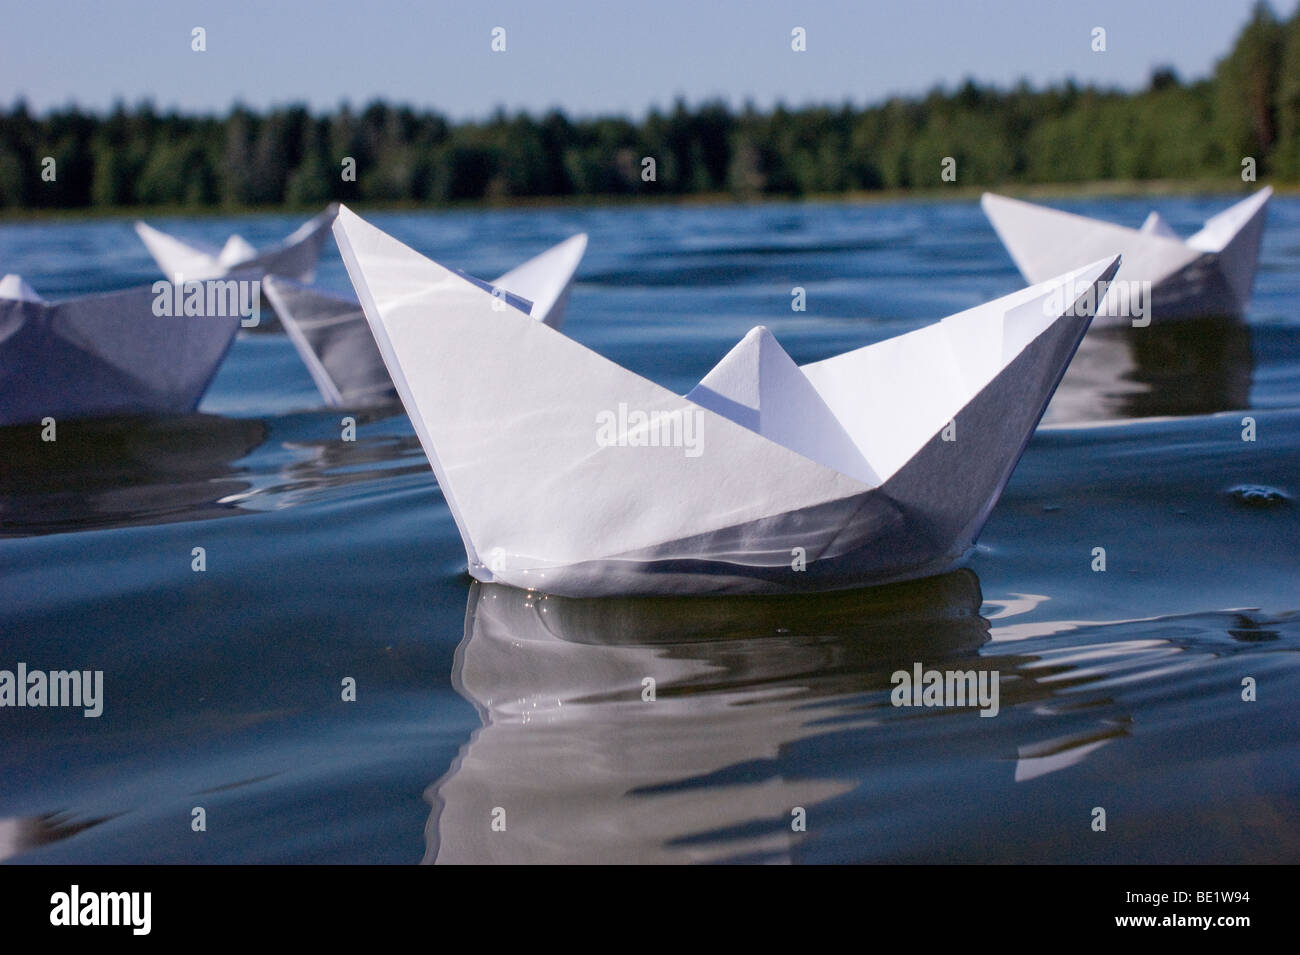 fleet of handmade paper boats (origami) in lake Stock Photo